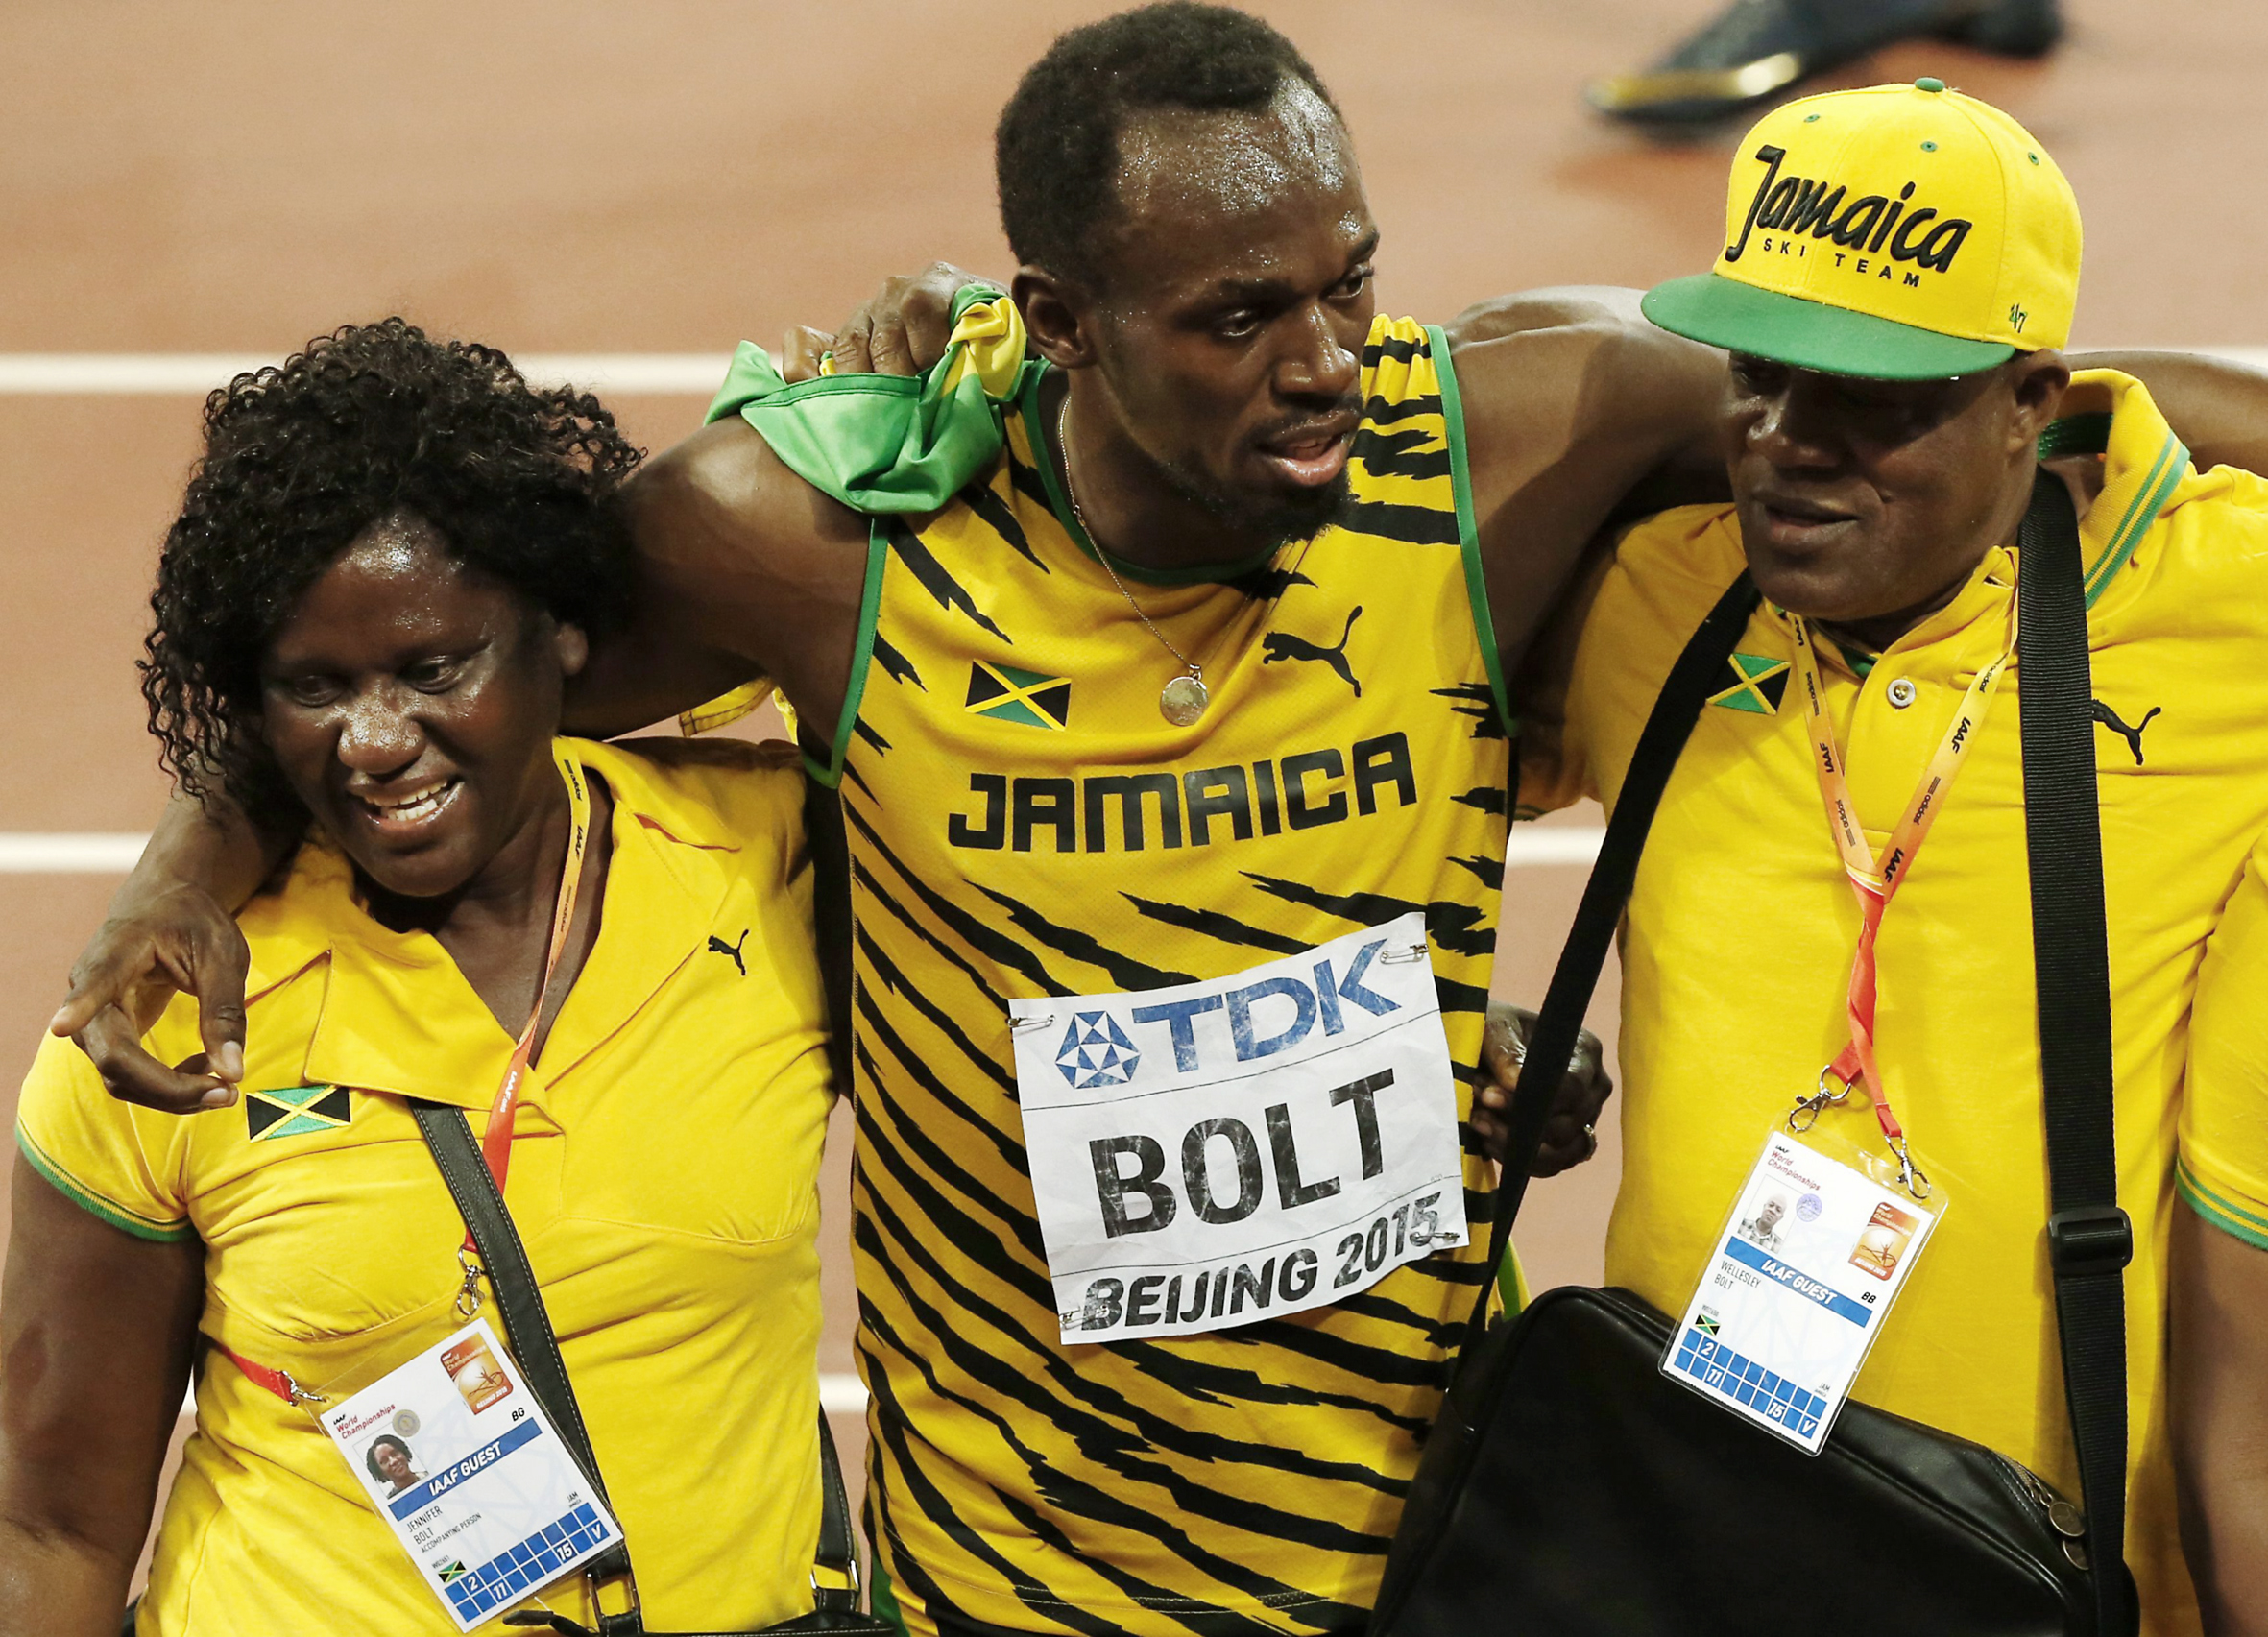 La madre de Usain Bolt es adventista